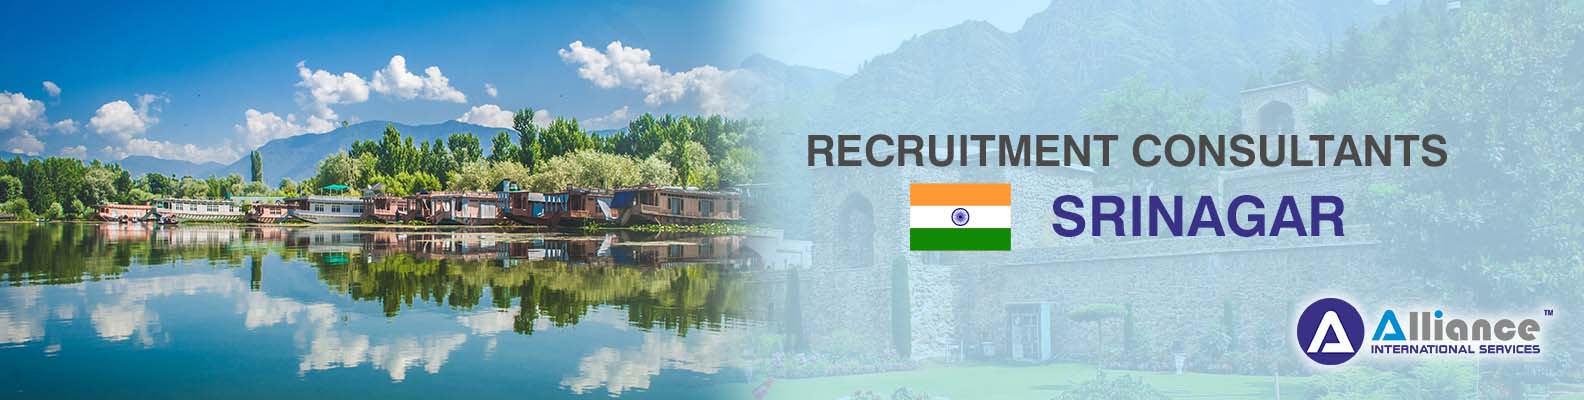 Recruitment Consultants Srinagar